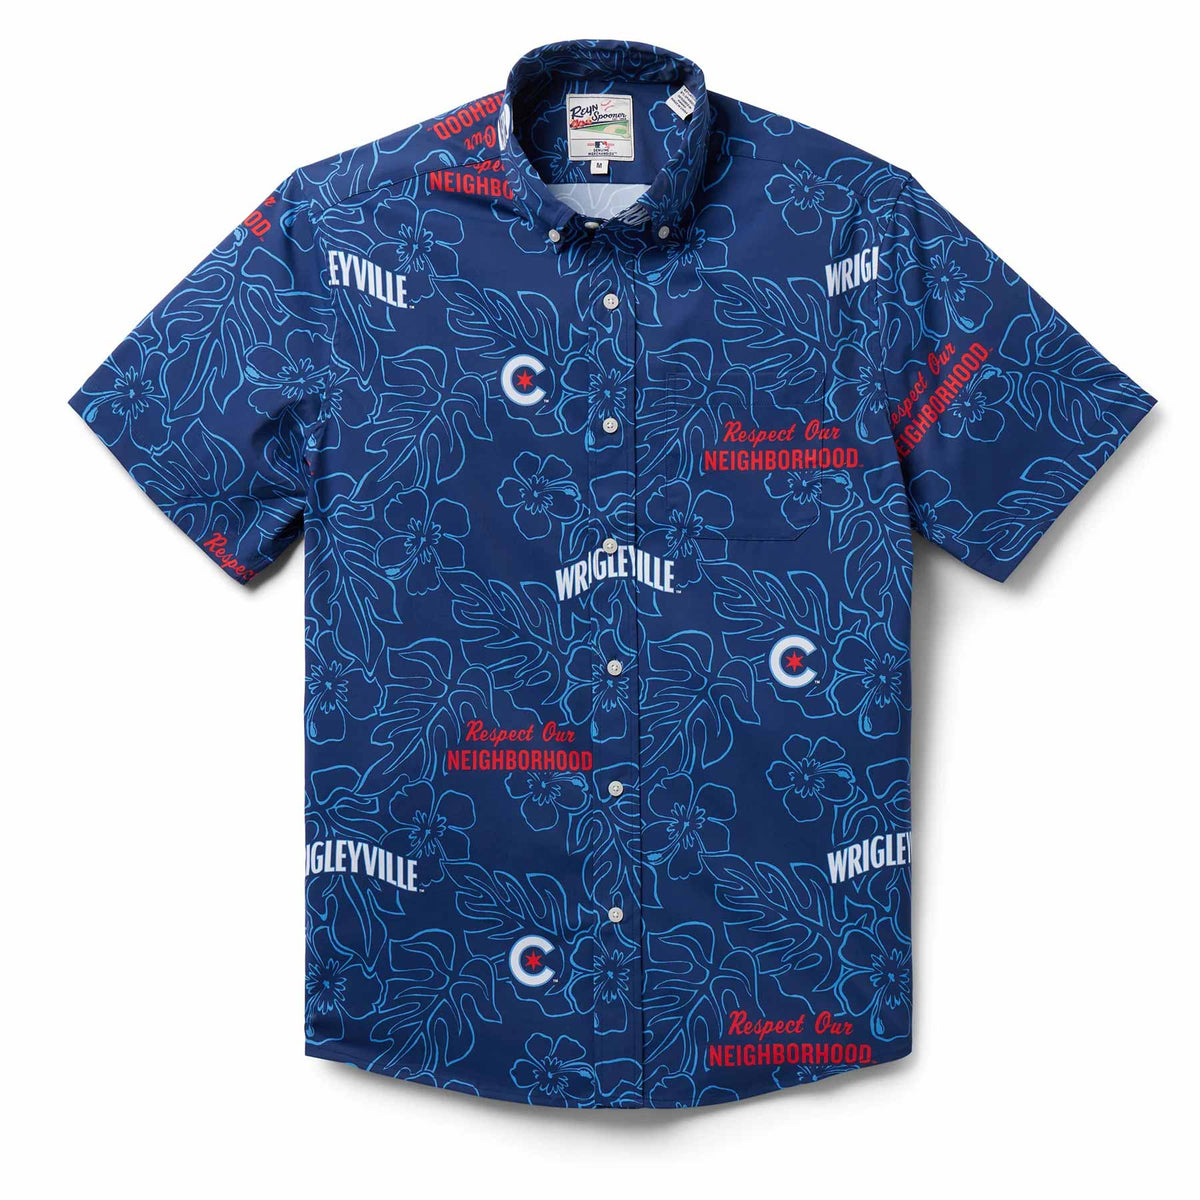 Men's Reyn Spooner Royal Chicago Cubs Aloha Button-Down Shirt